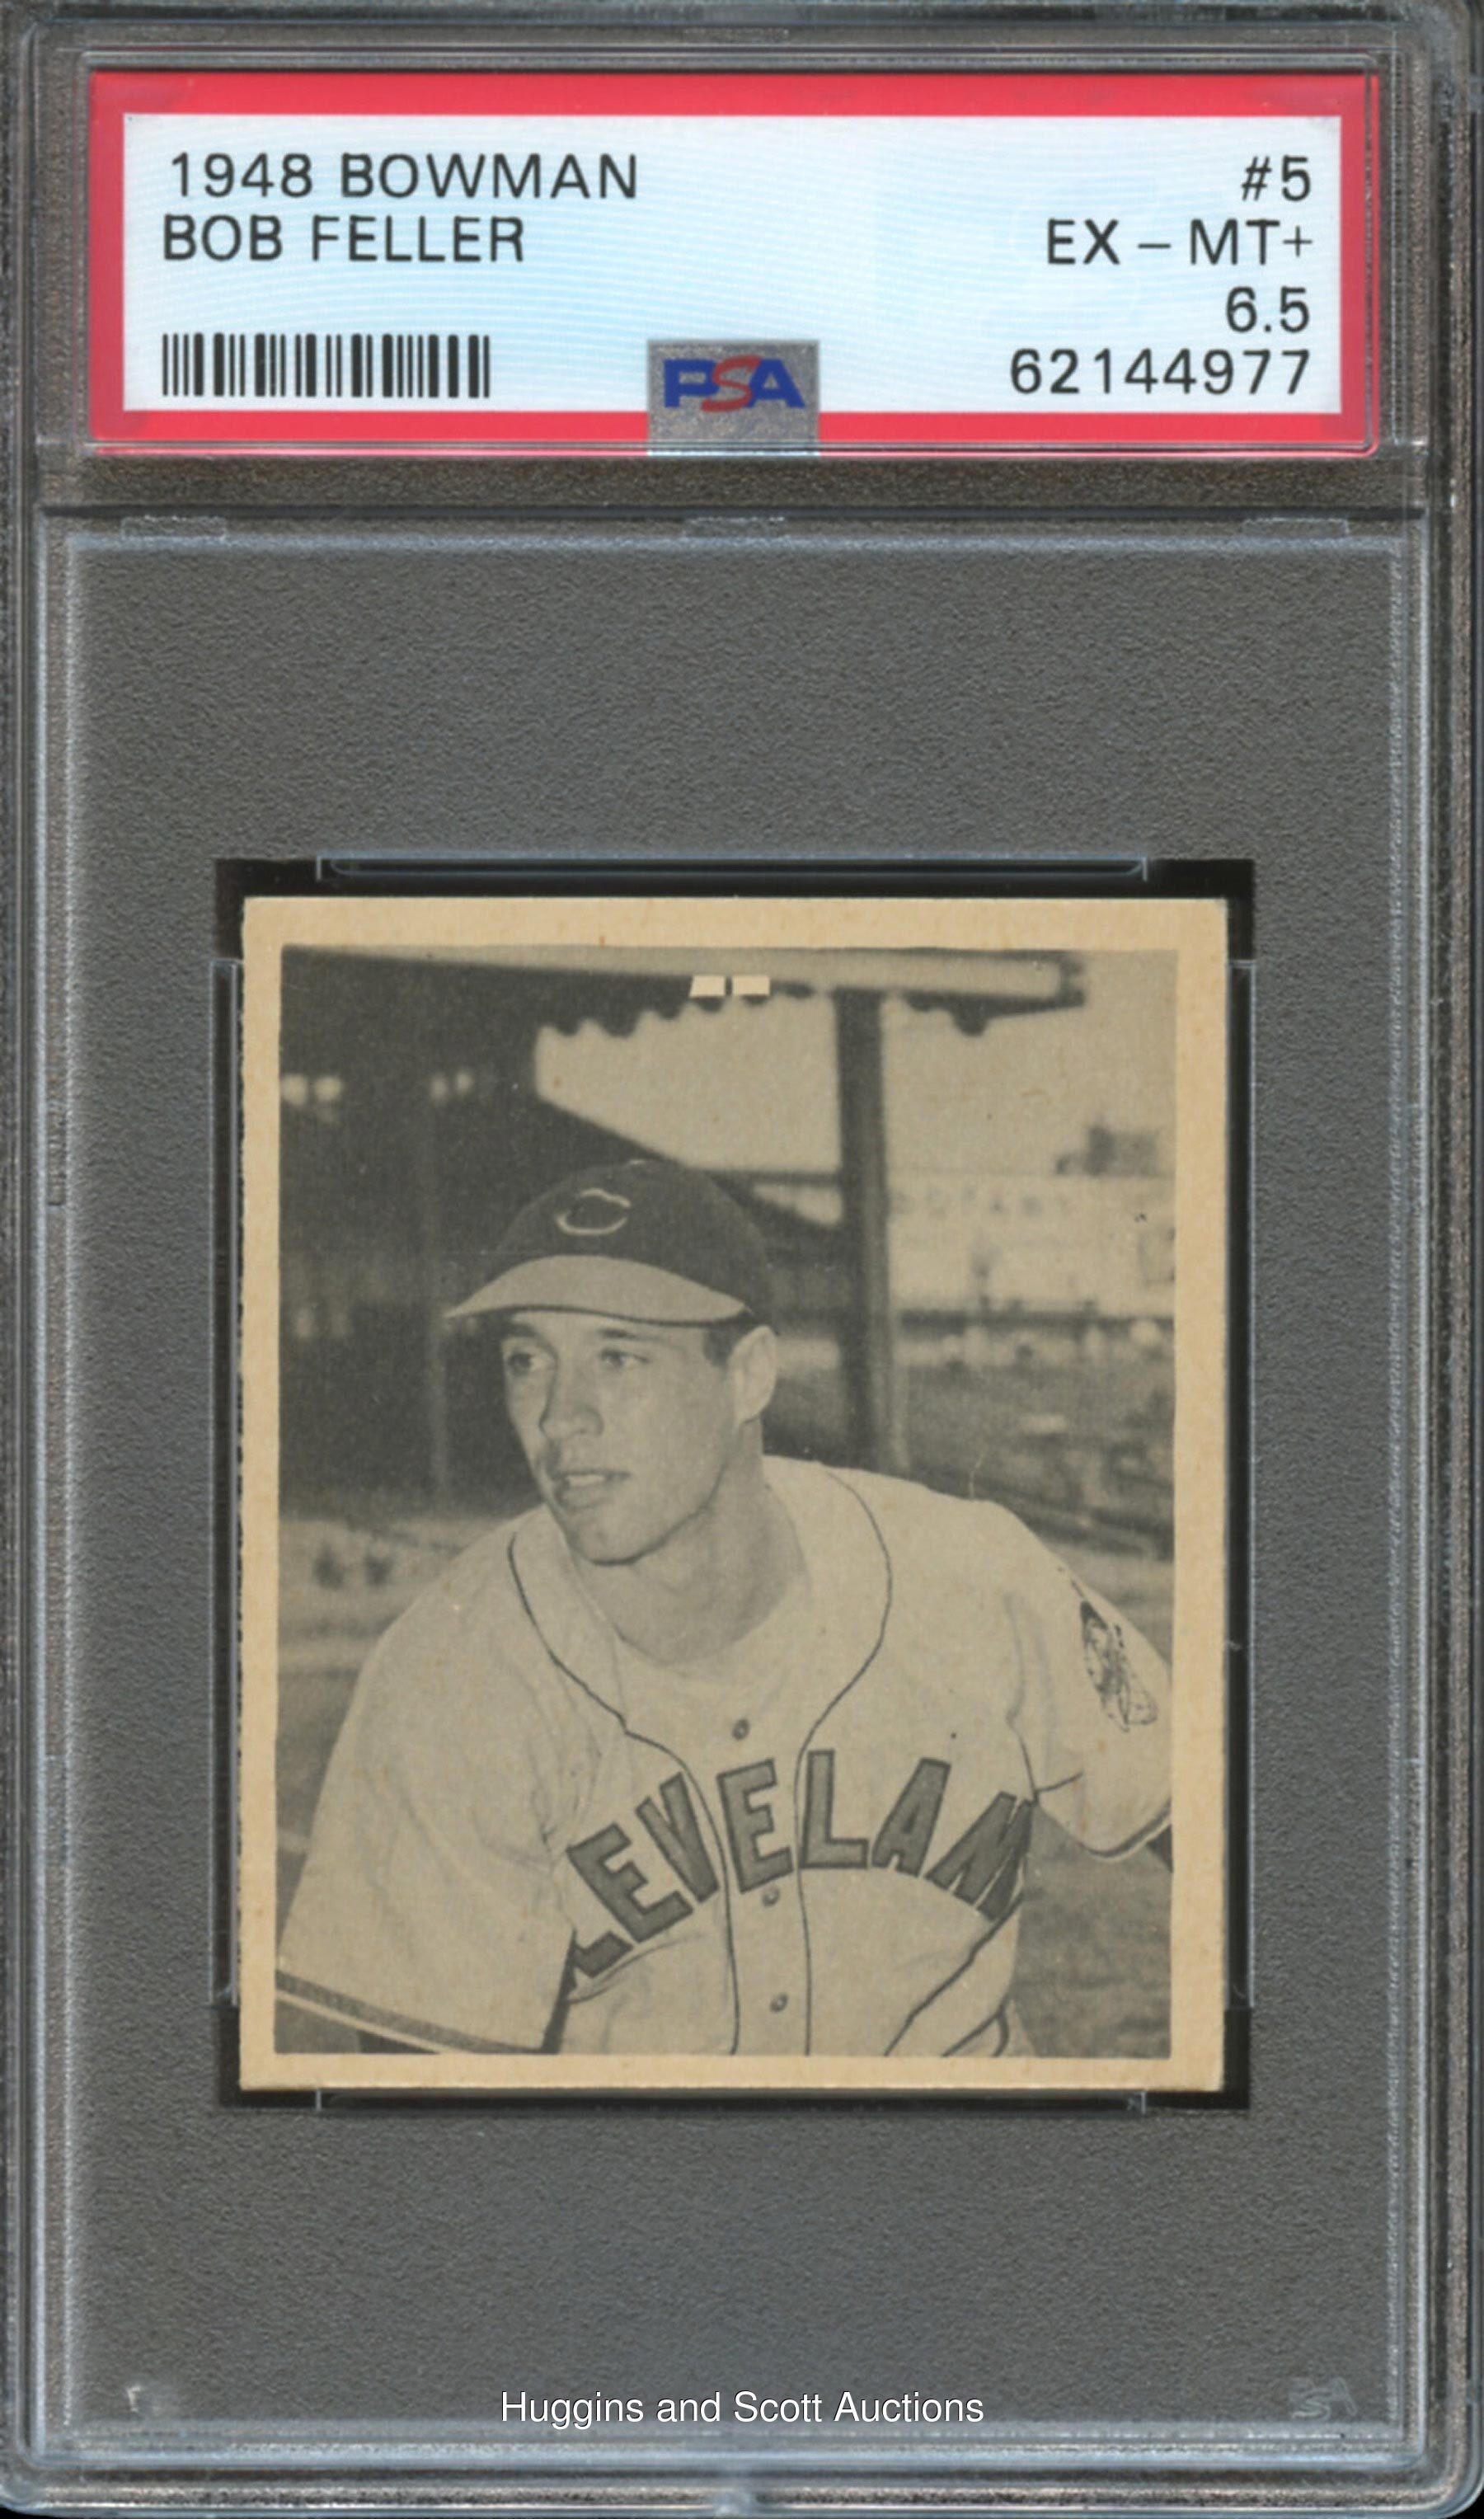 1948 Bowman Baseball #5 Bob Feller - PSA EX-MT+ 6.5